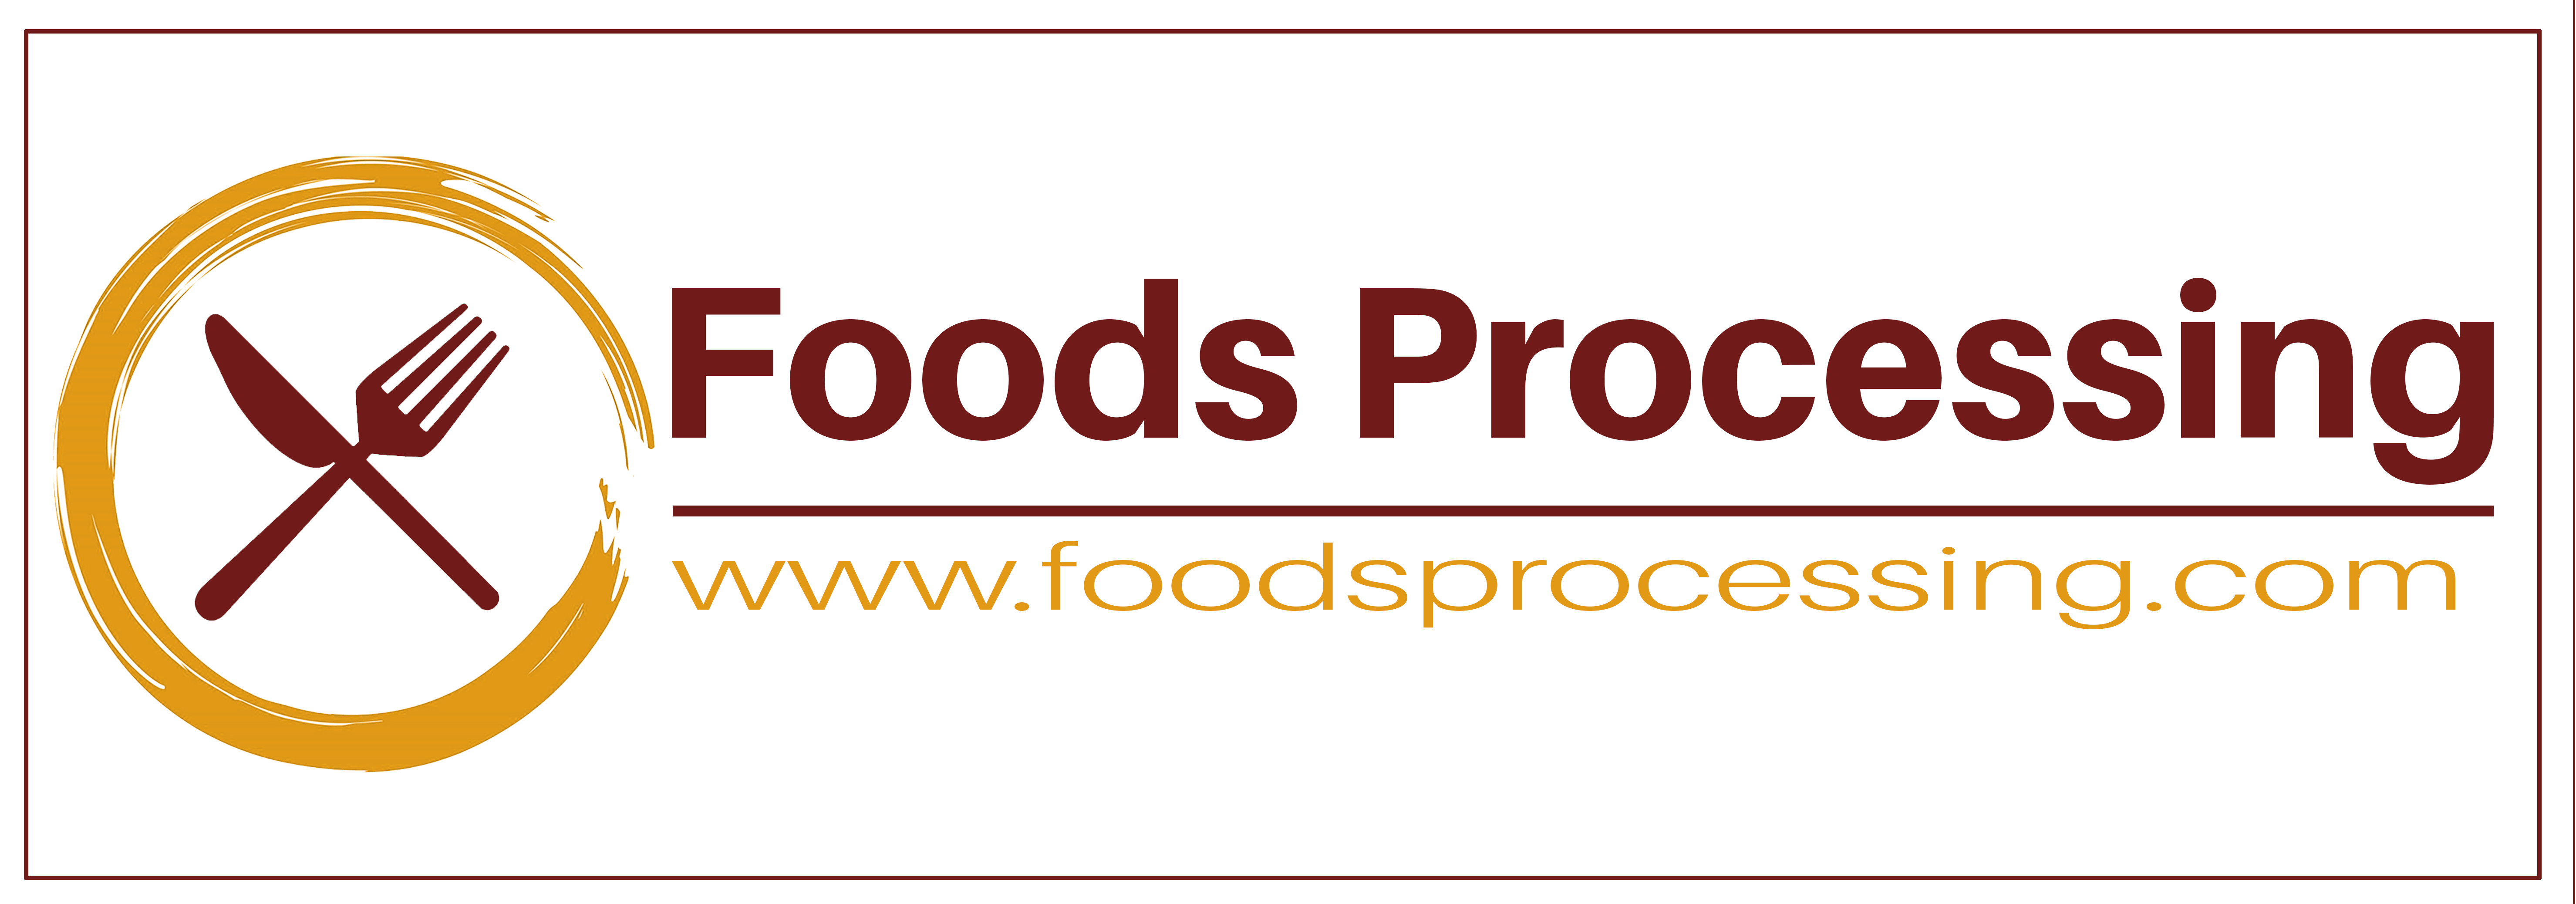 http://foodsprocessing.com